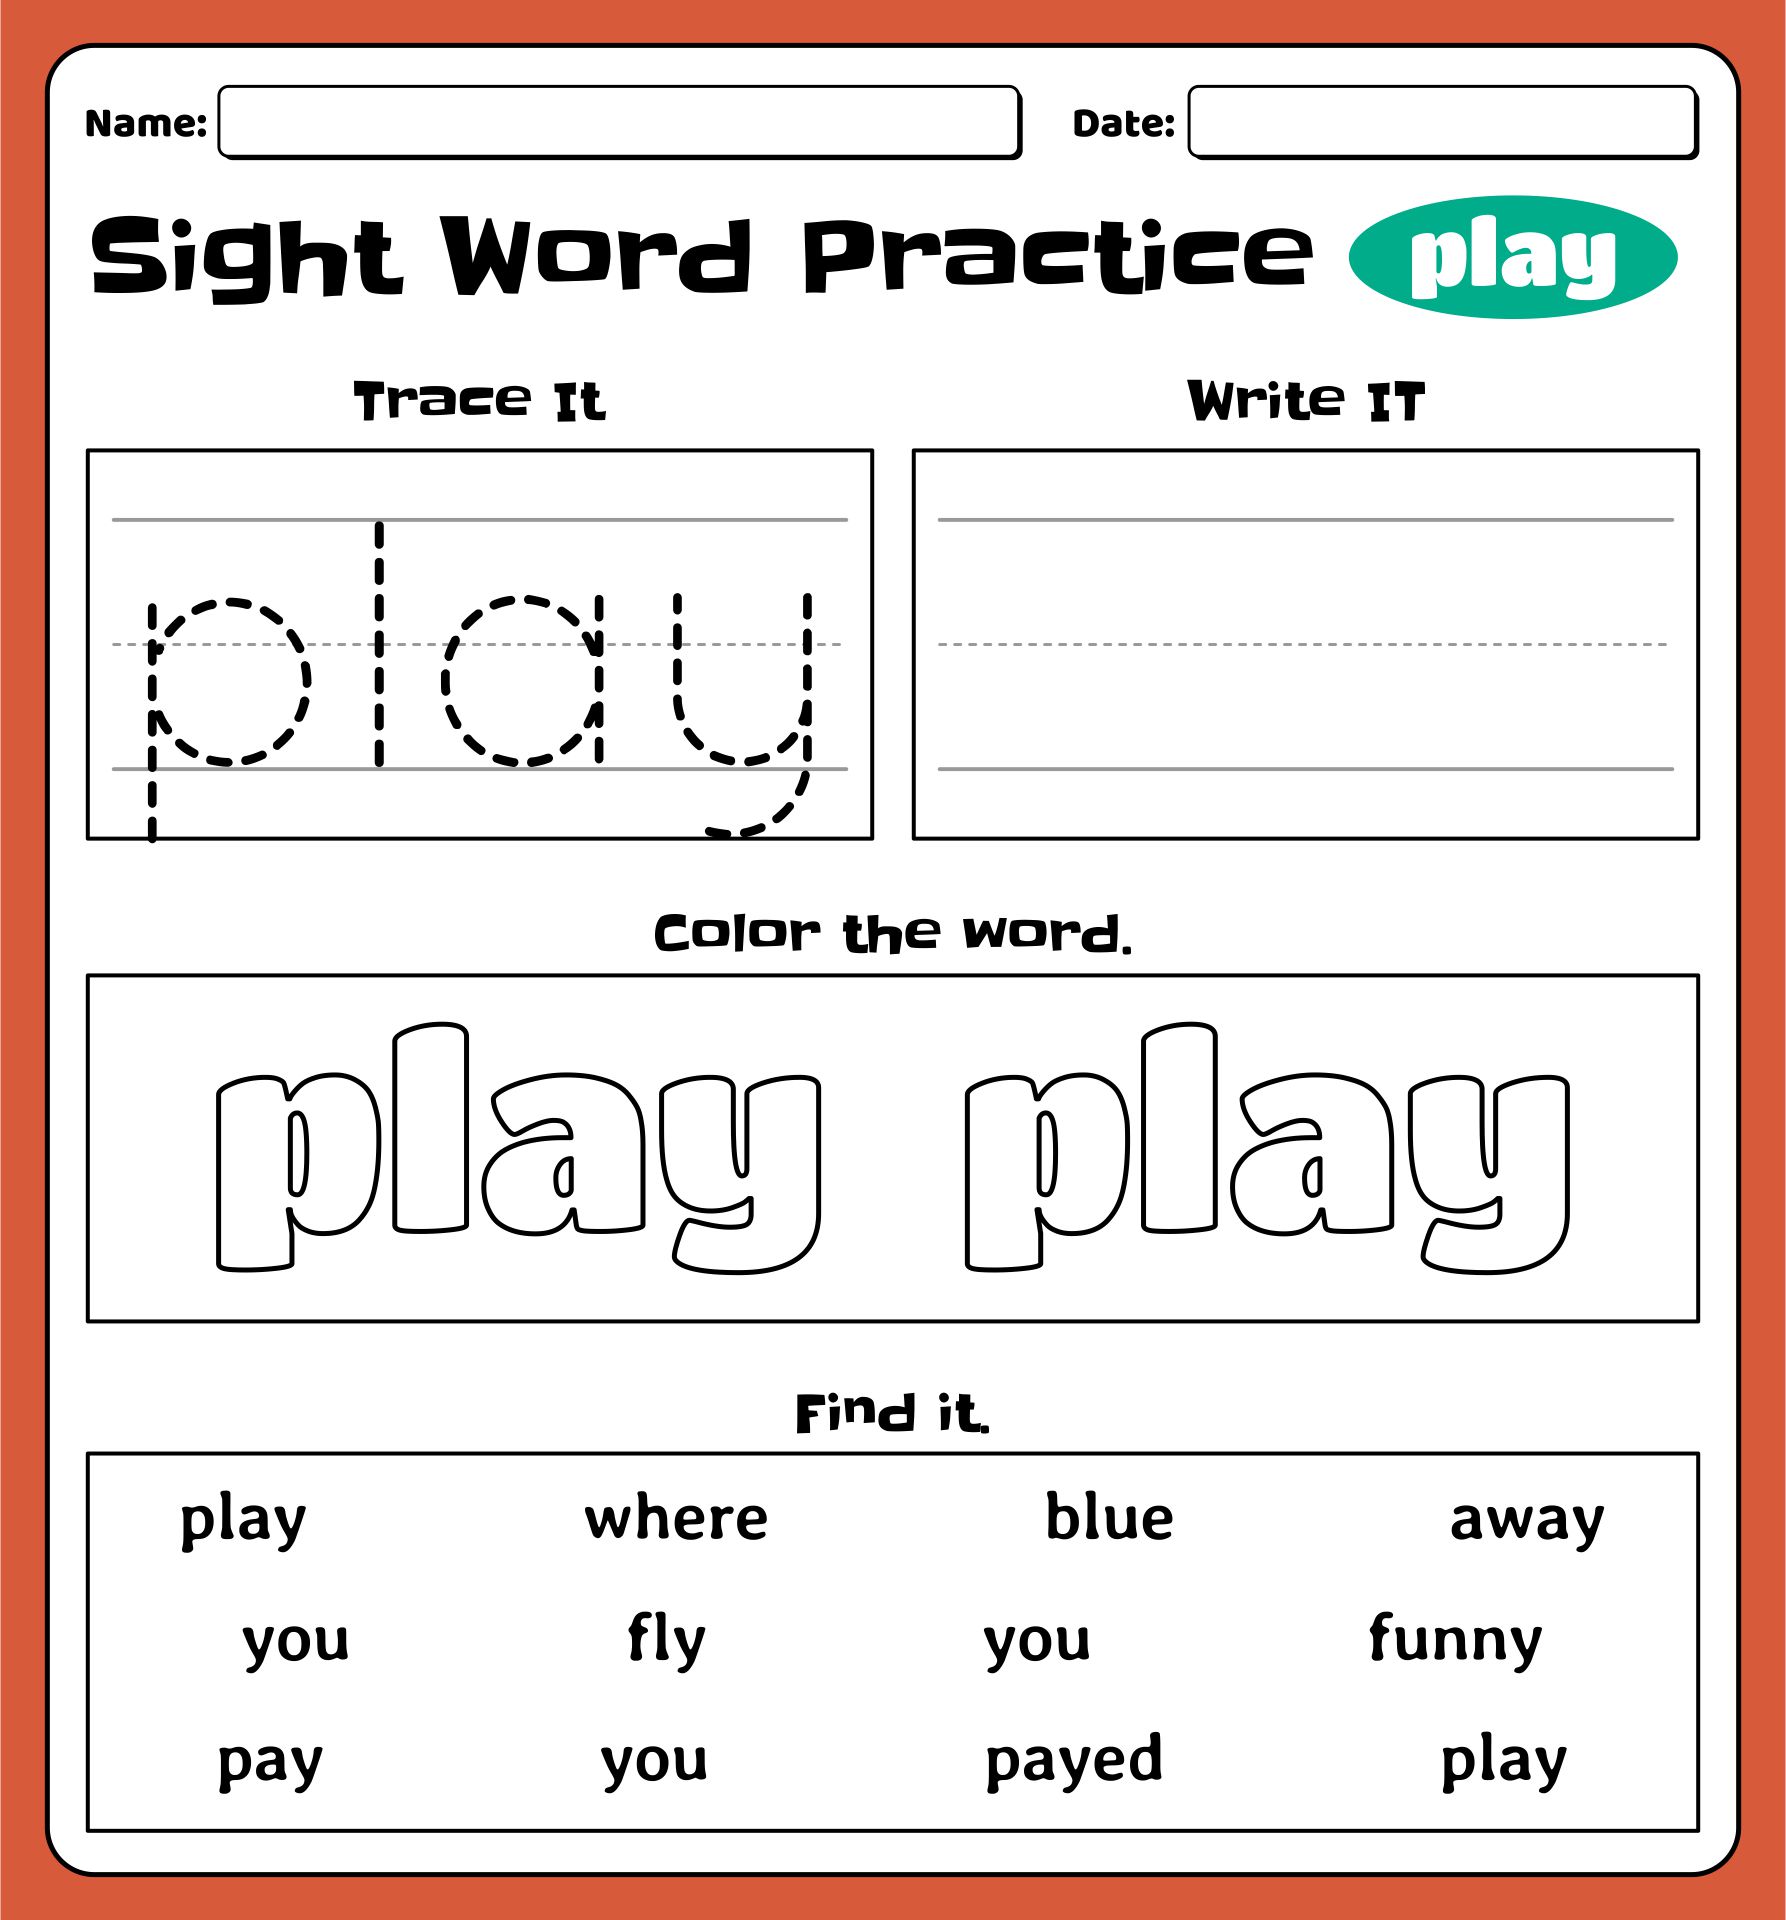 Preschool Tracing Worksheets